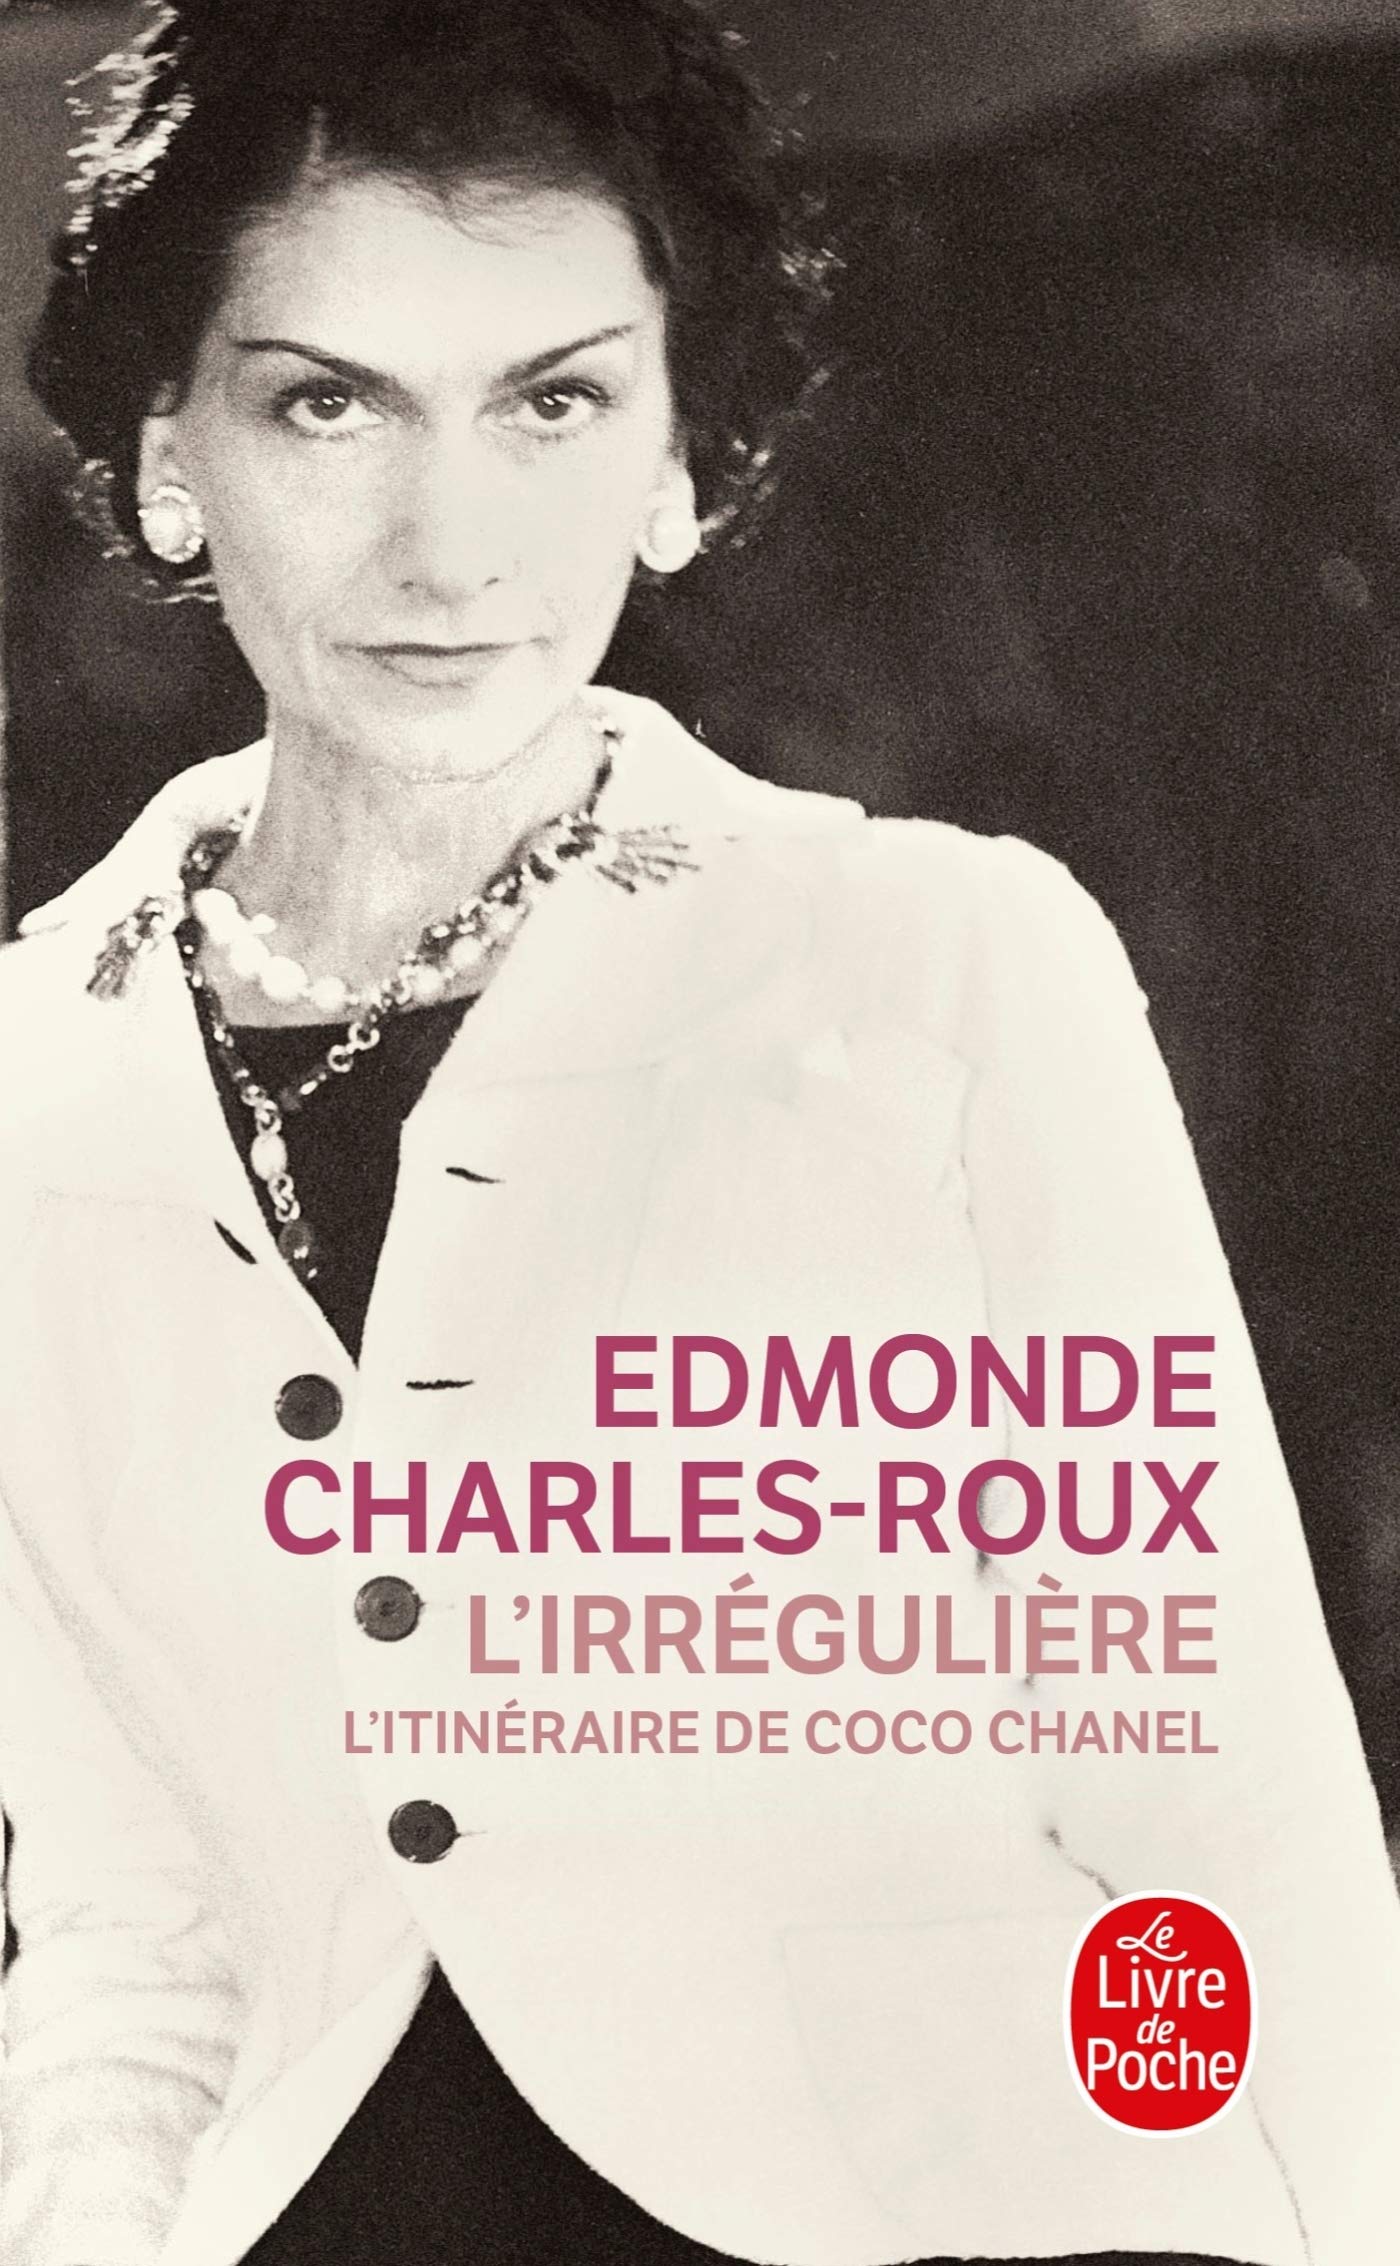 Charles-Roux E. - L'Irreguliere ou mon itineraire Coco Chanel